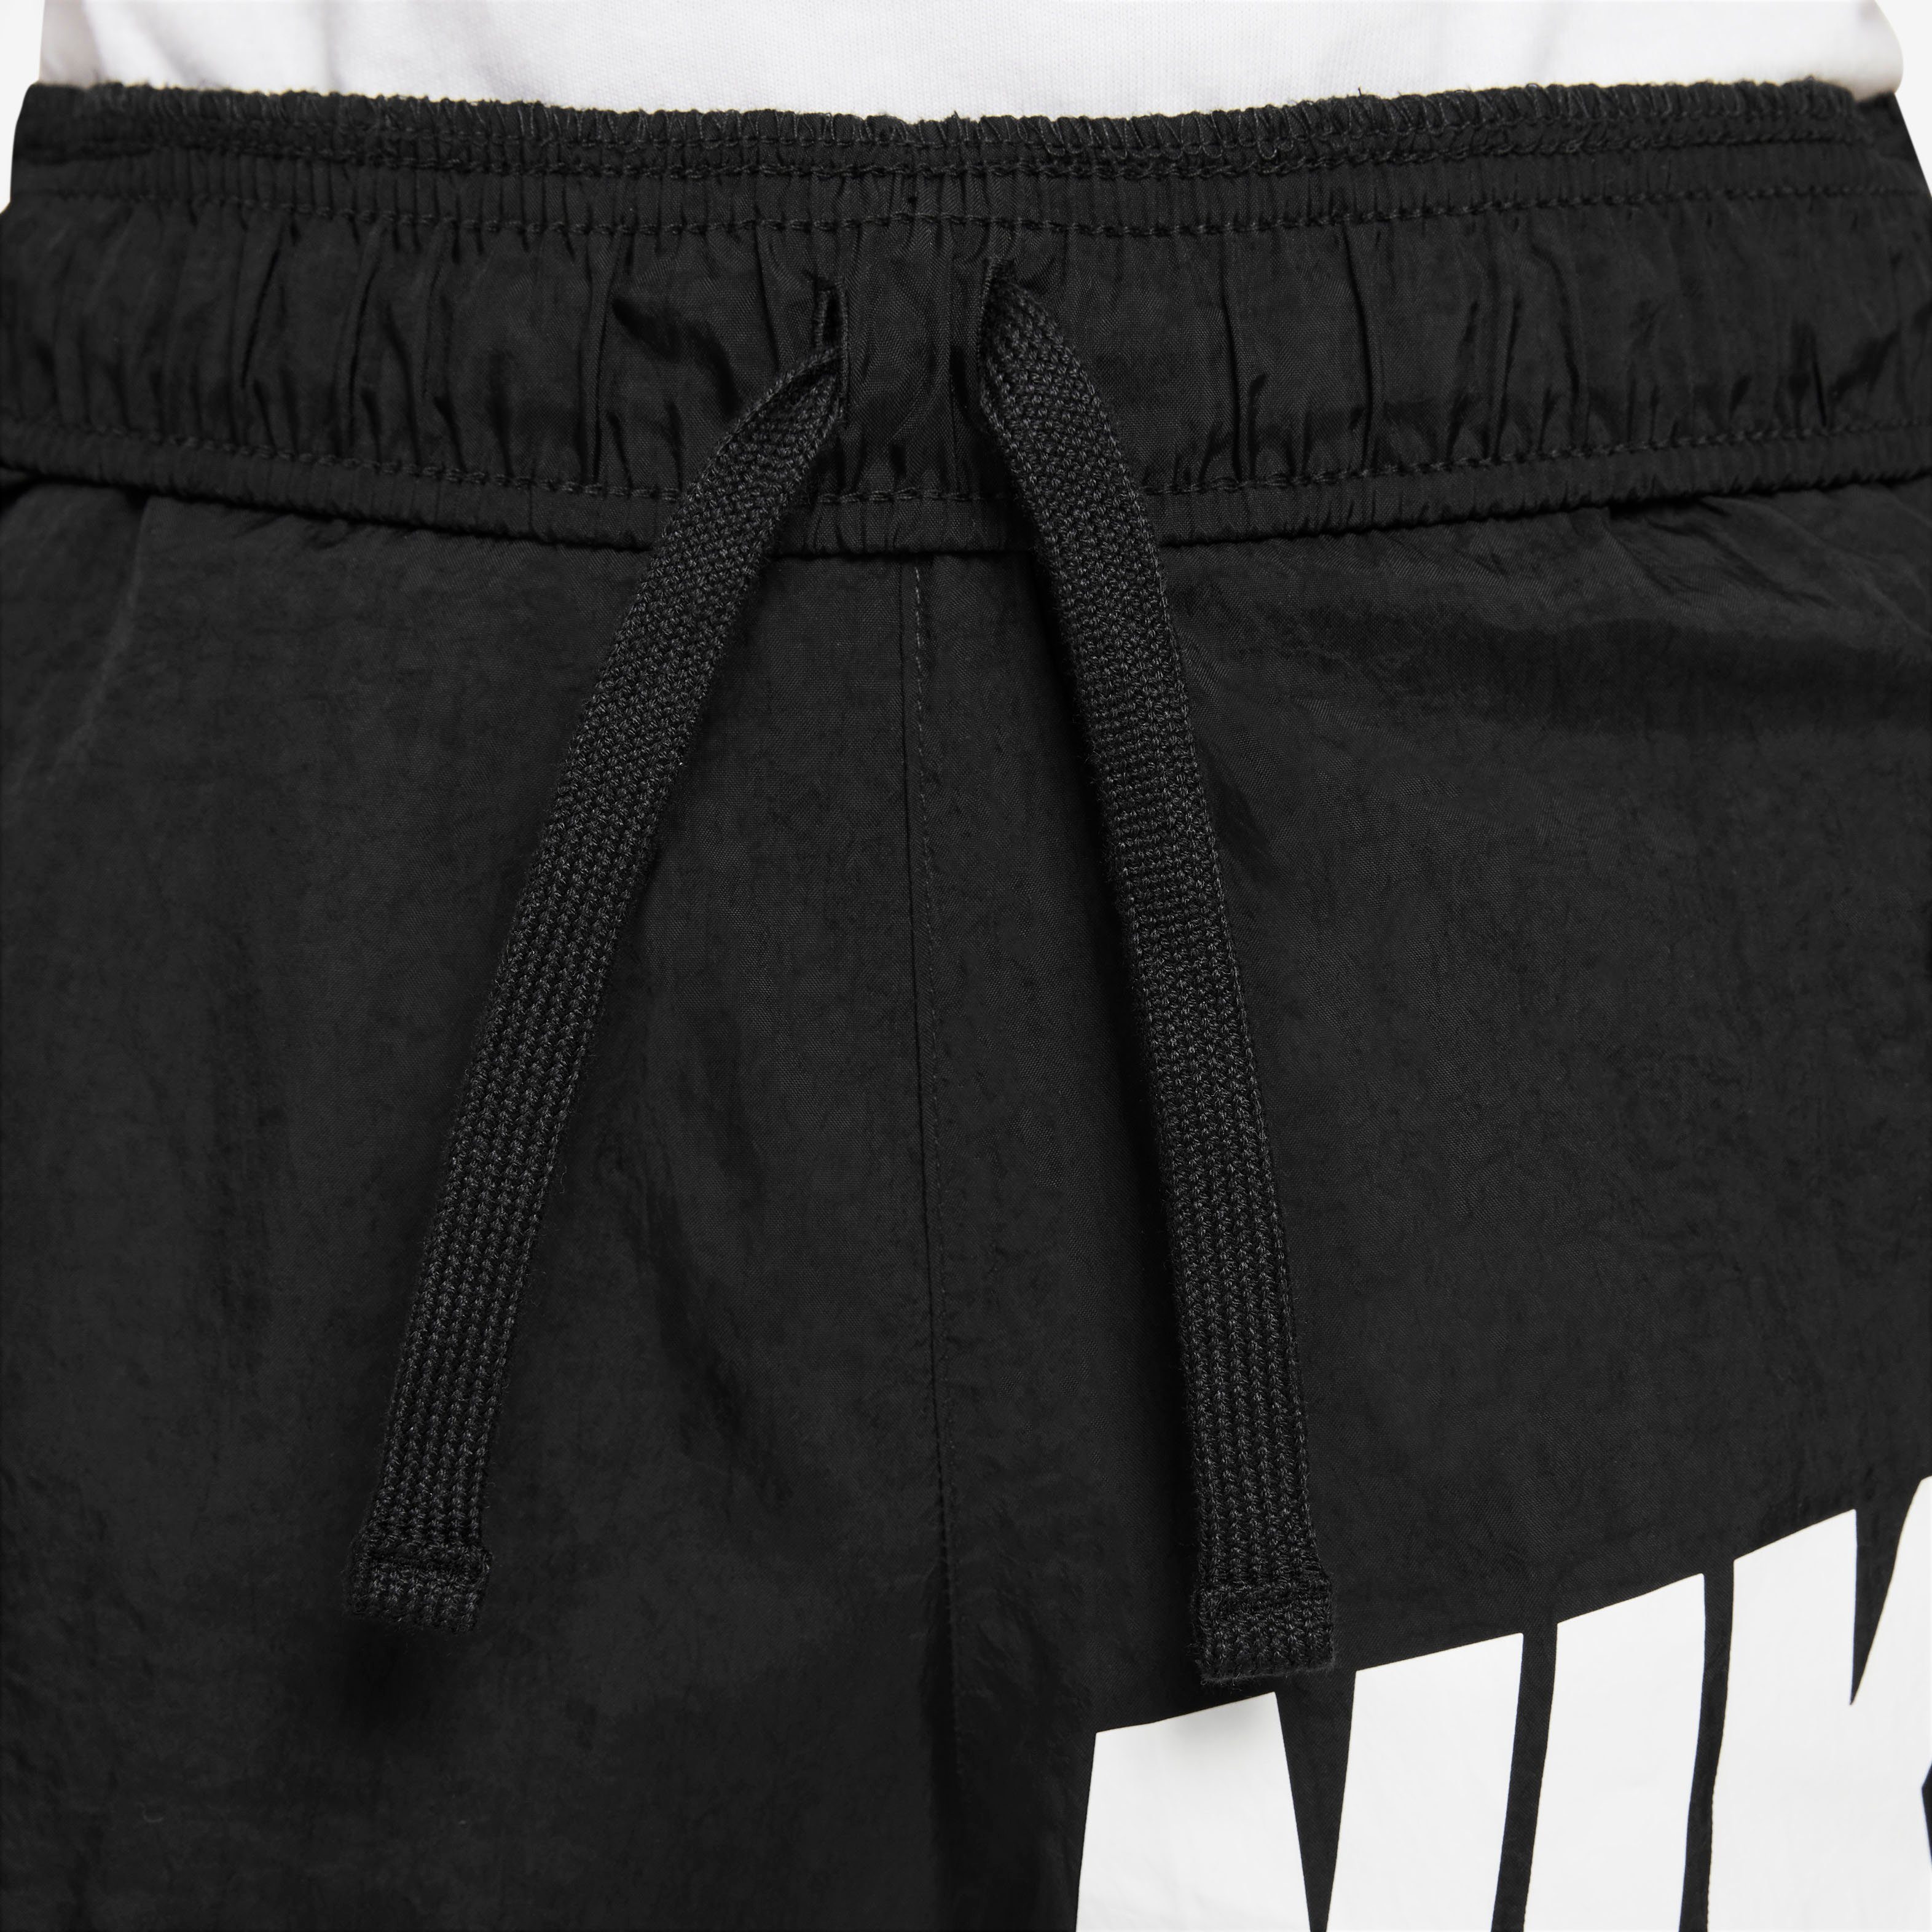 Big Shorts Nike Sportswear schwarz Woven Kids' Shorts (Boys)